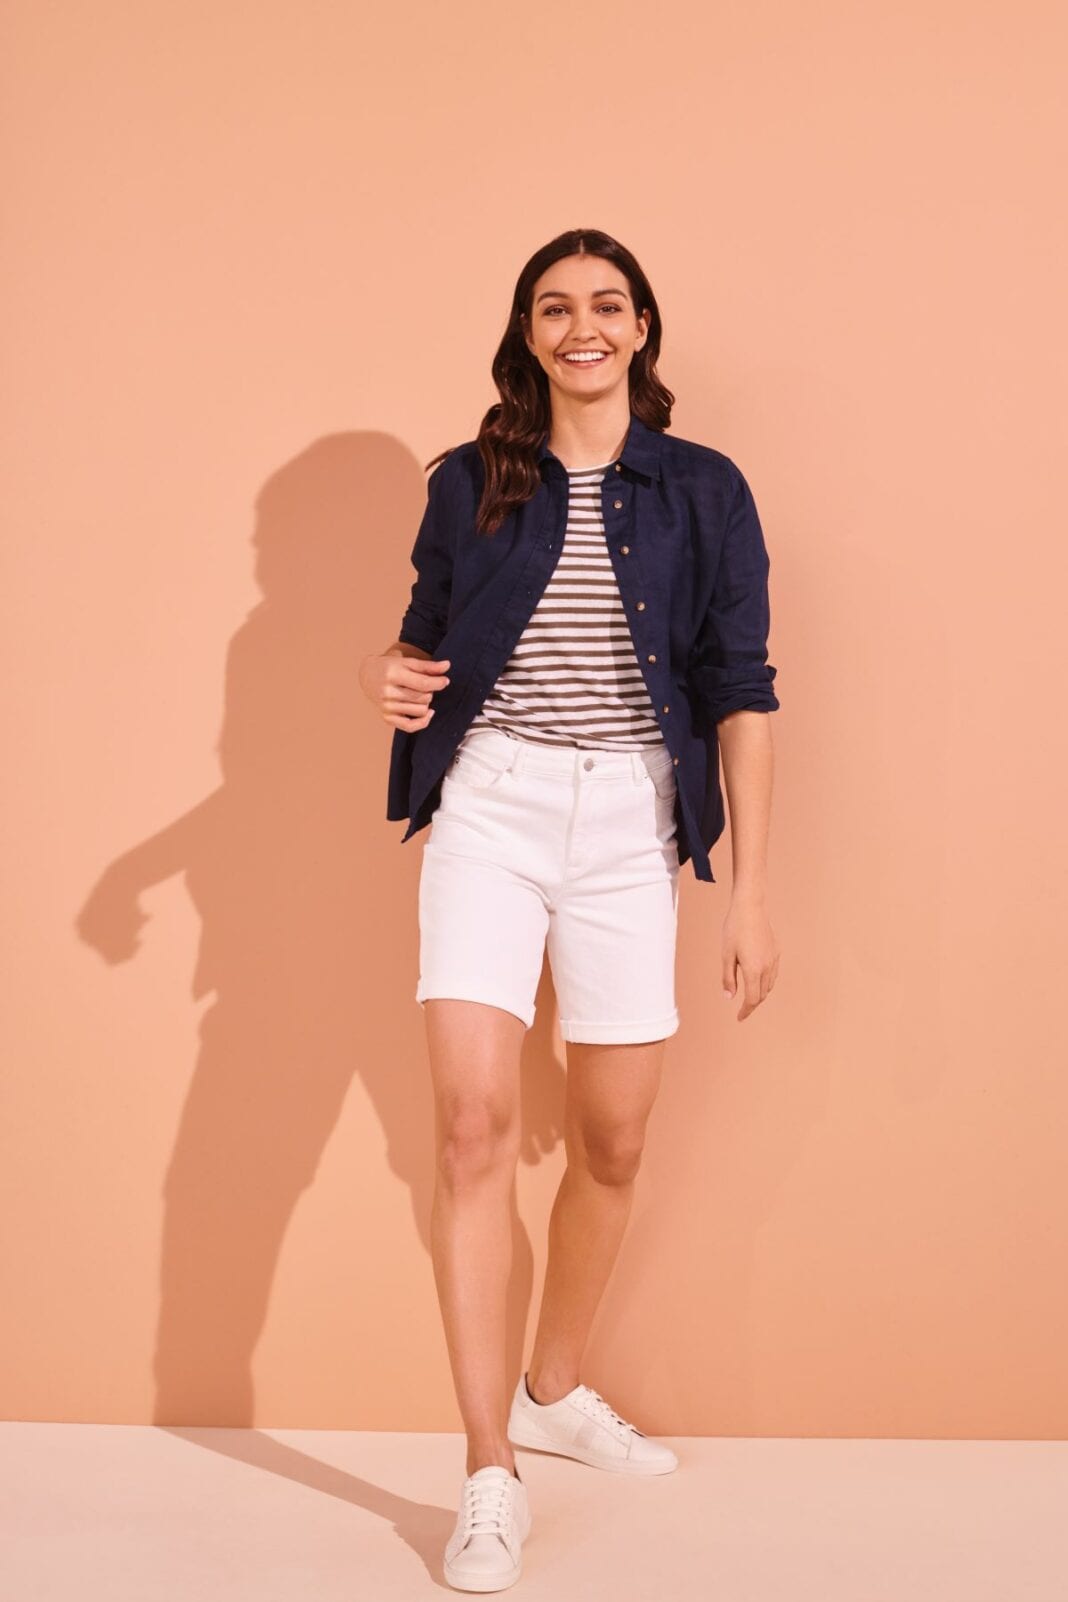 Summer trends: Η καλοκαρινή συλλογή Marks & Spencer είναι γεμάτη χρώμα για να δημιουργήσεις υπέροχα και φωτεινά looks